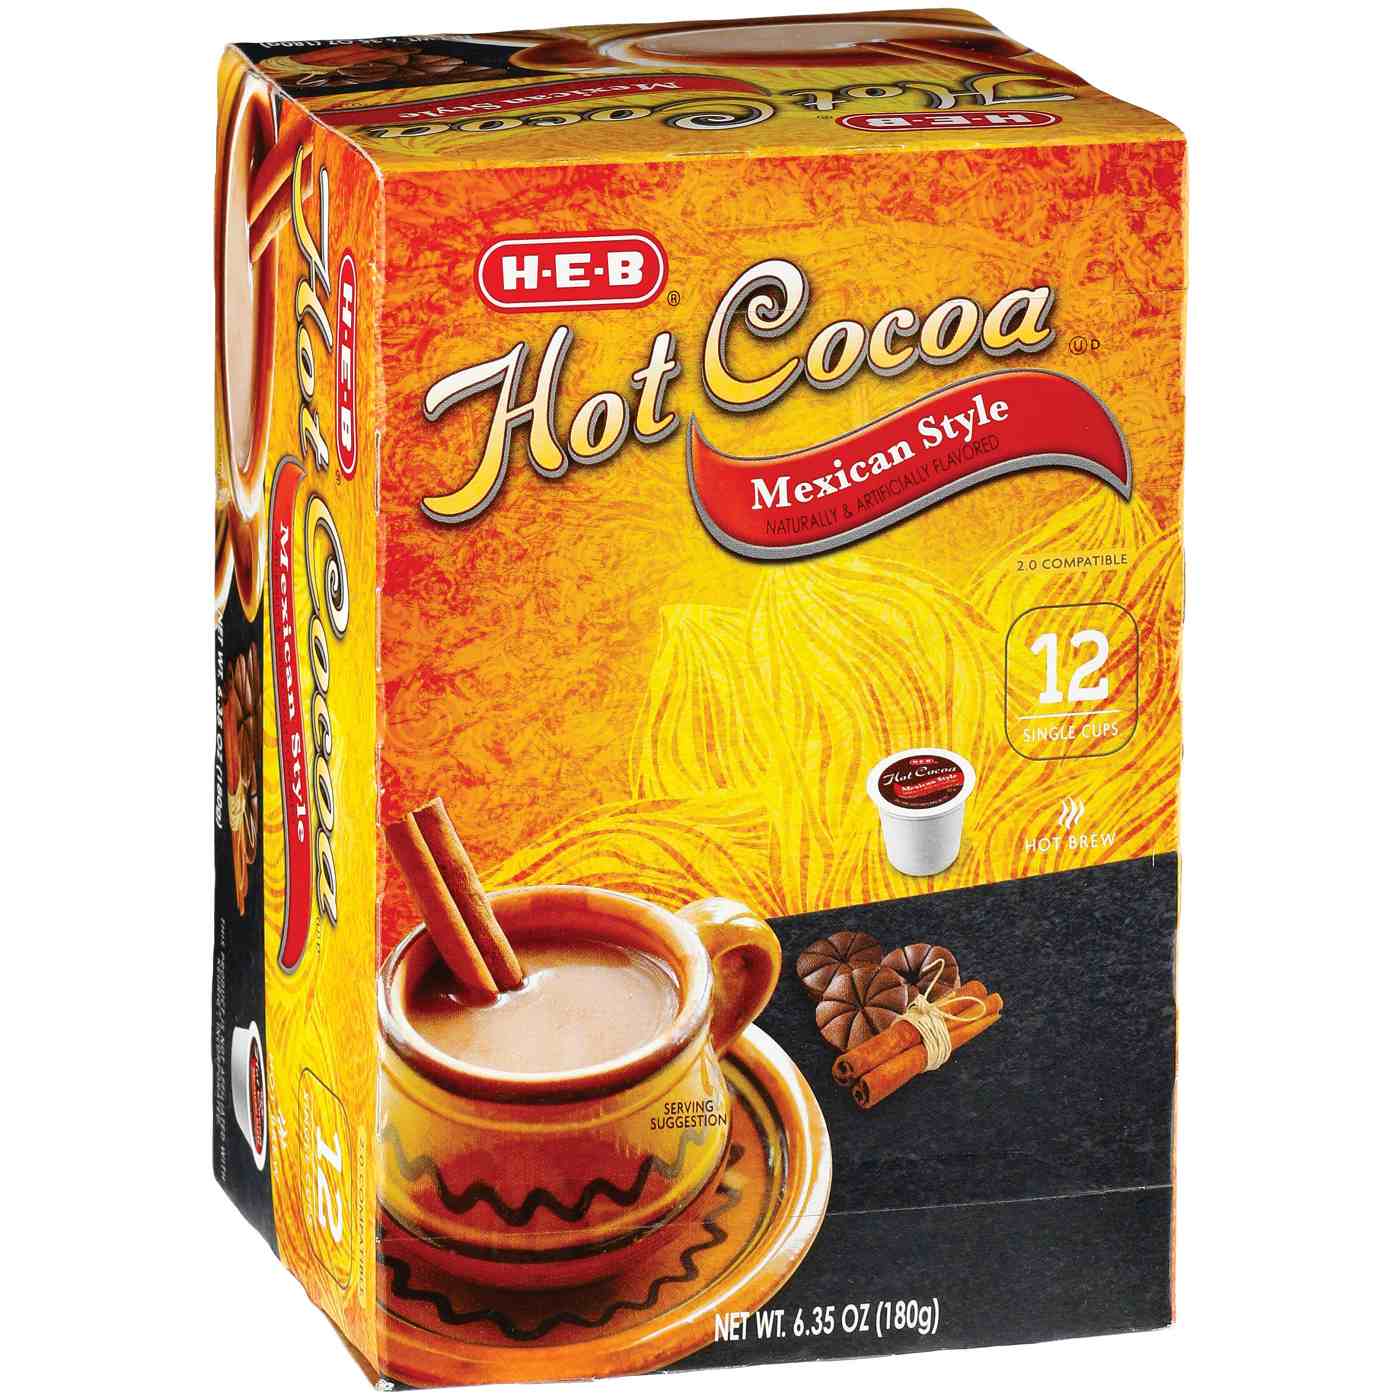 H-E-B Mexican Style Hot Cocoa Single Serve Cups; image 1 of 2